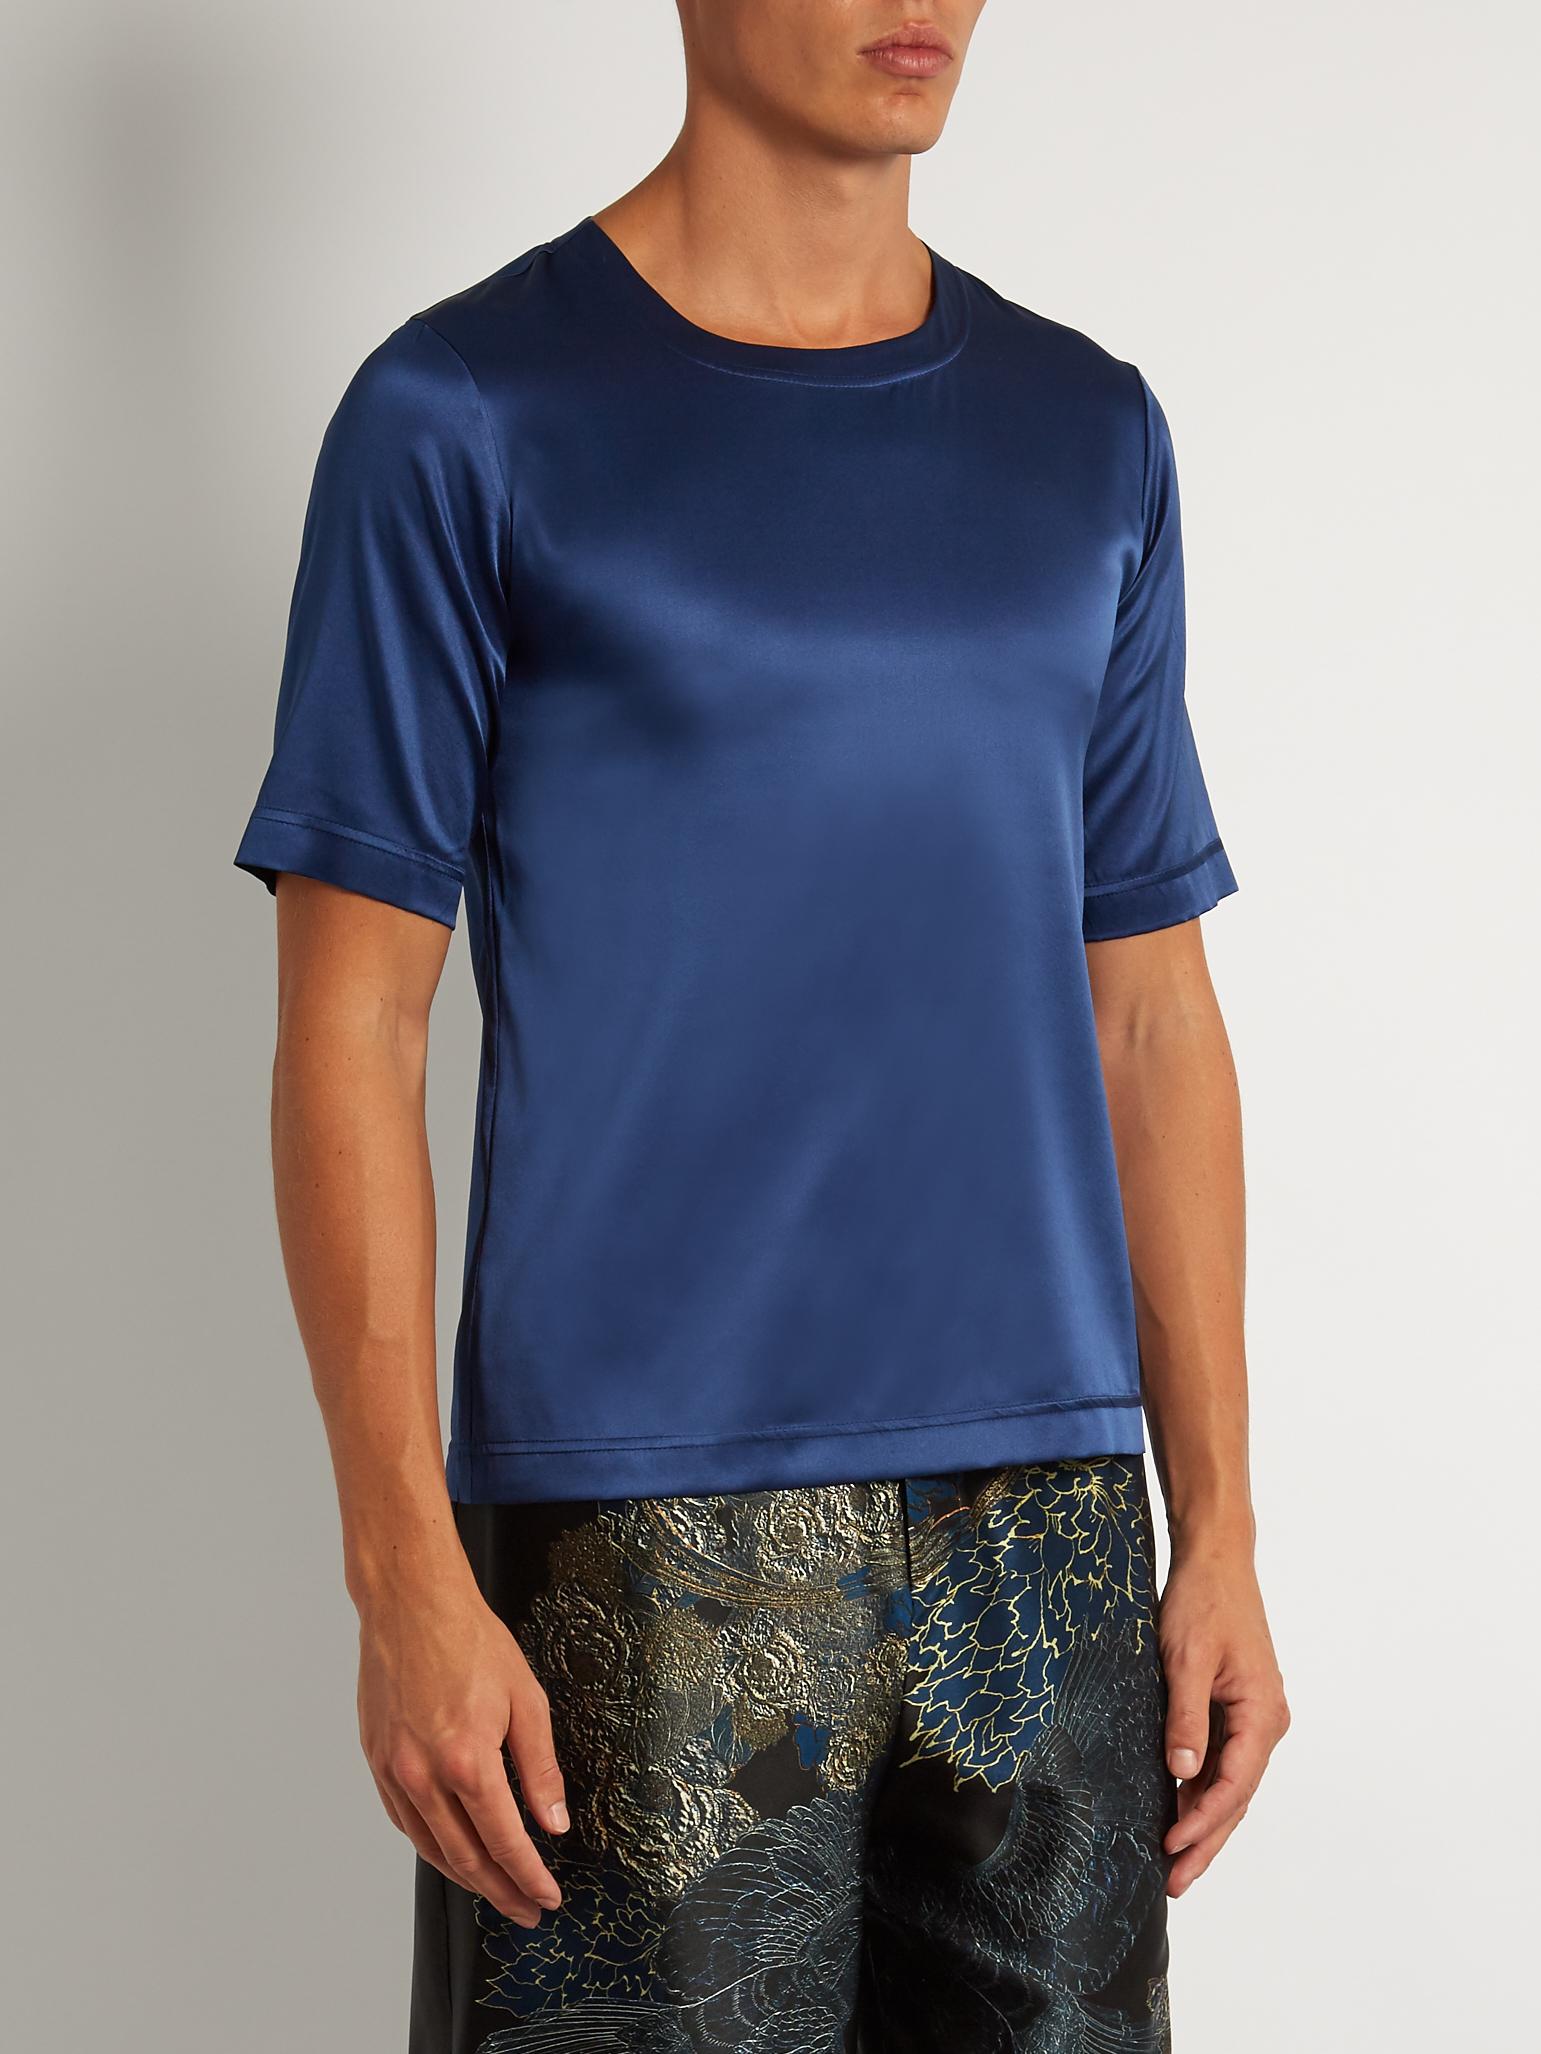 Meng Stretch Silk-satin T-shirt in Navy (Blue) for Men - Lyst